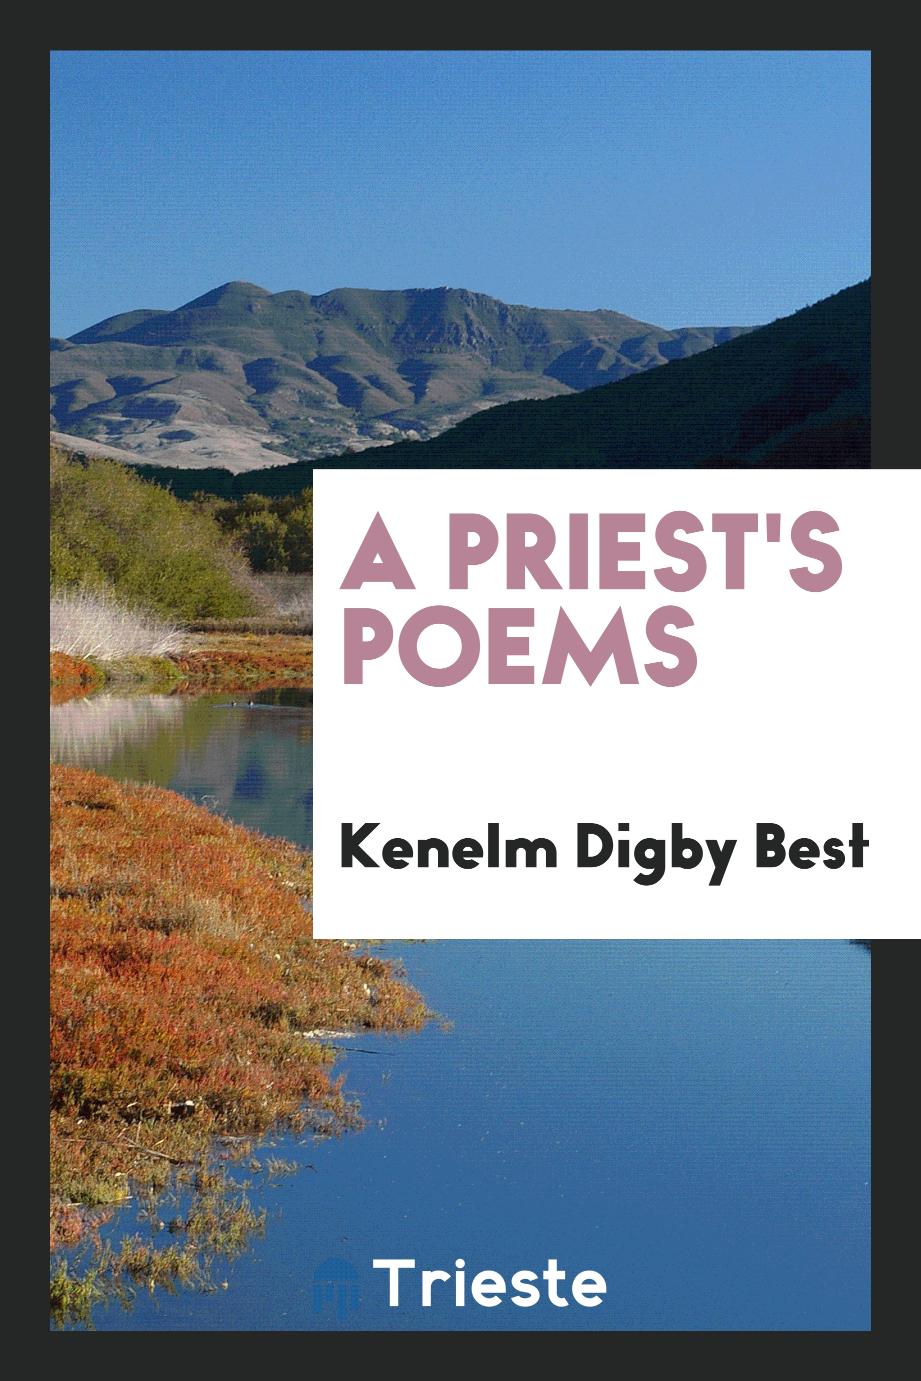 A priest's poems